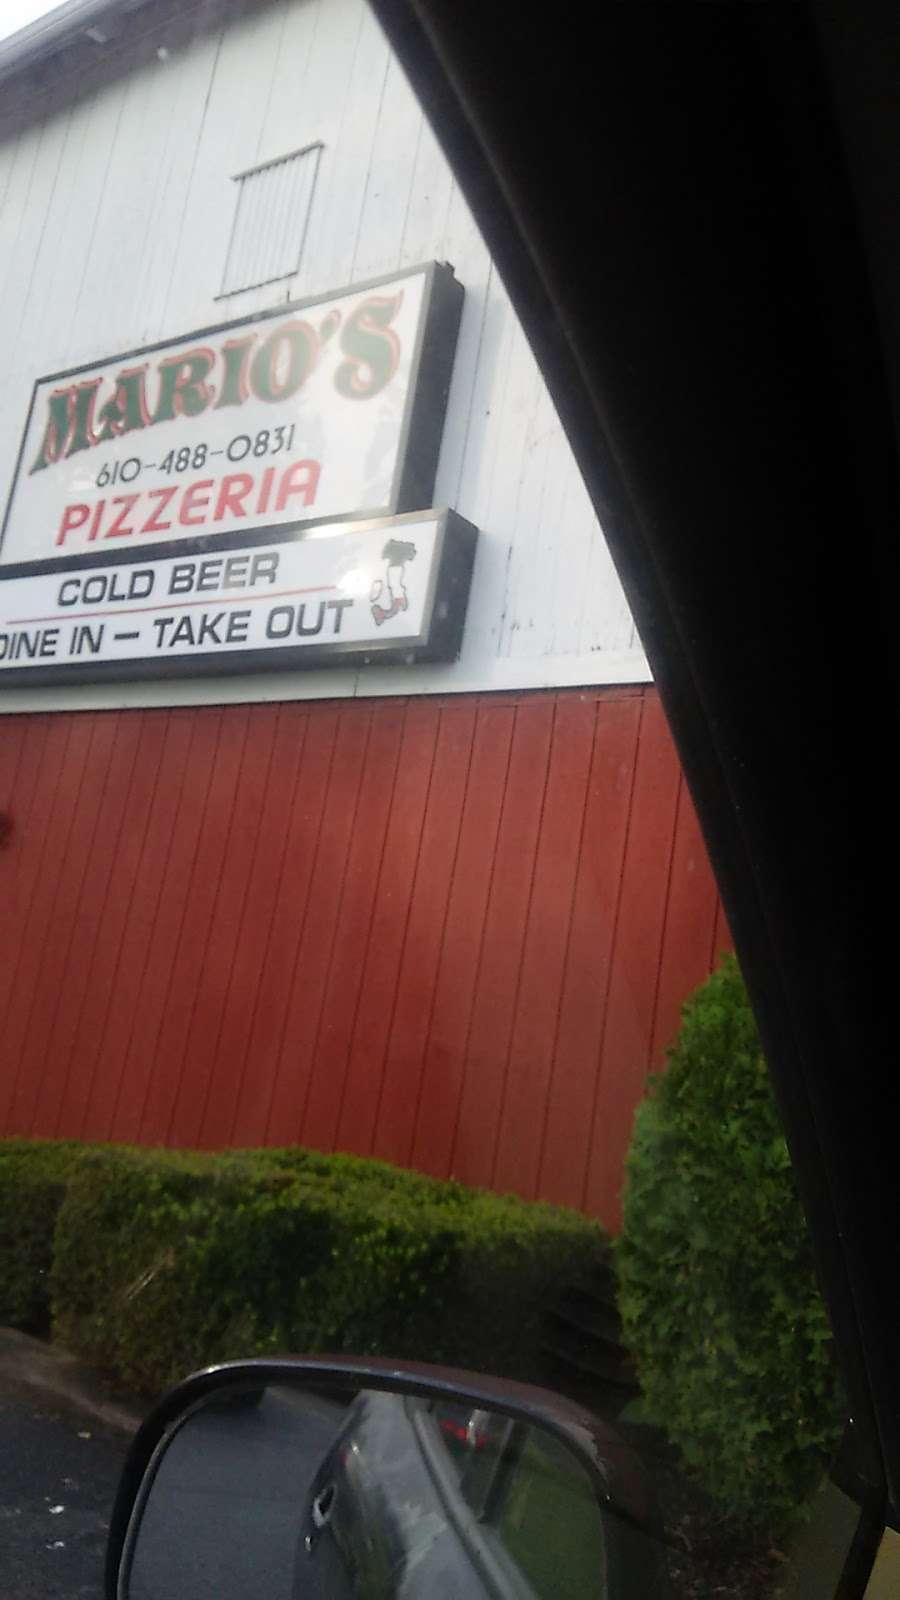 Marios Pizzeria Restaurant | 300 Penn Valley Rd, Bernville, PA 19506 | Phone: (610) 488-0831